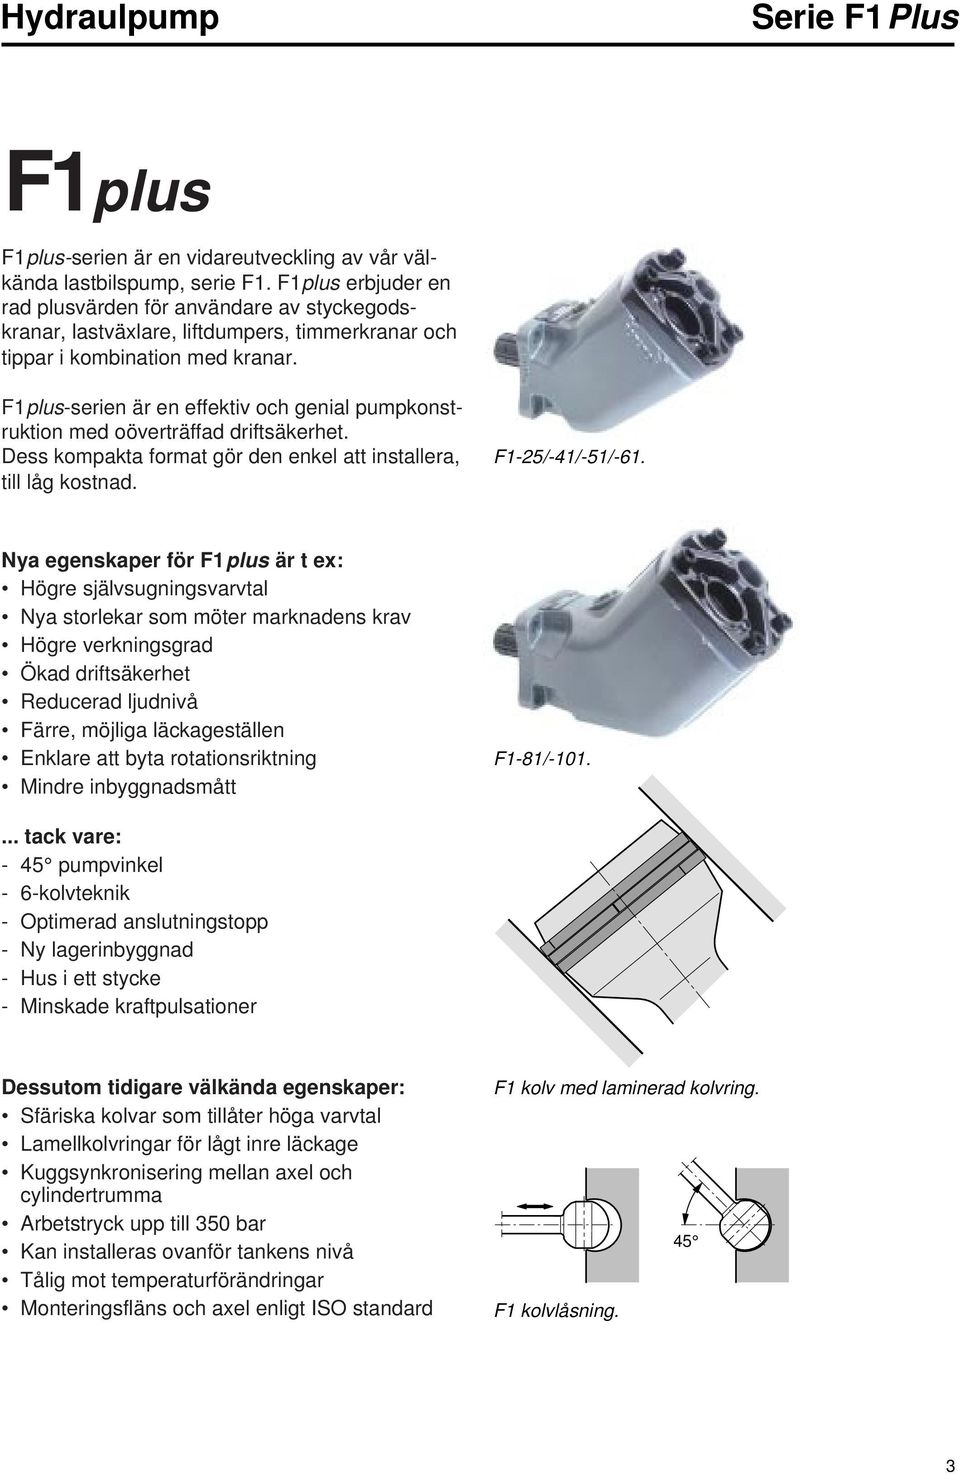 Hydraulpump Serie F1Plus Fast Deplacement - PDF Gratis nedladdning